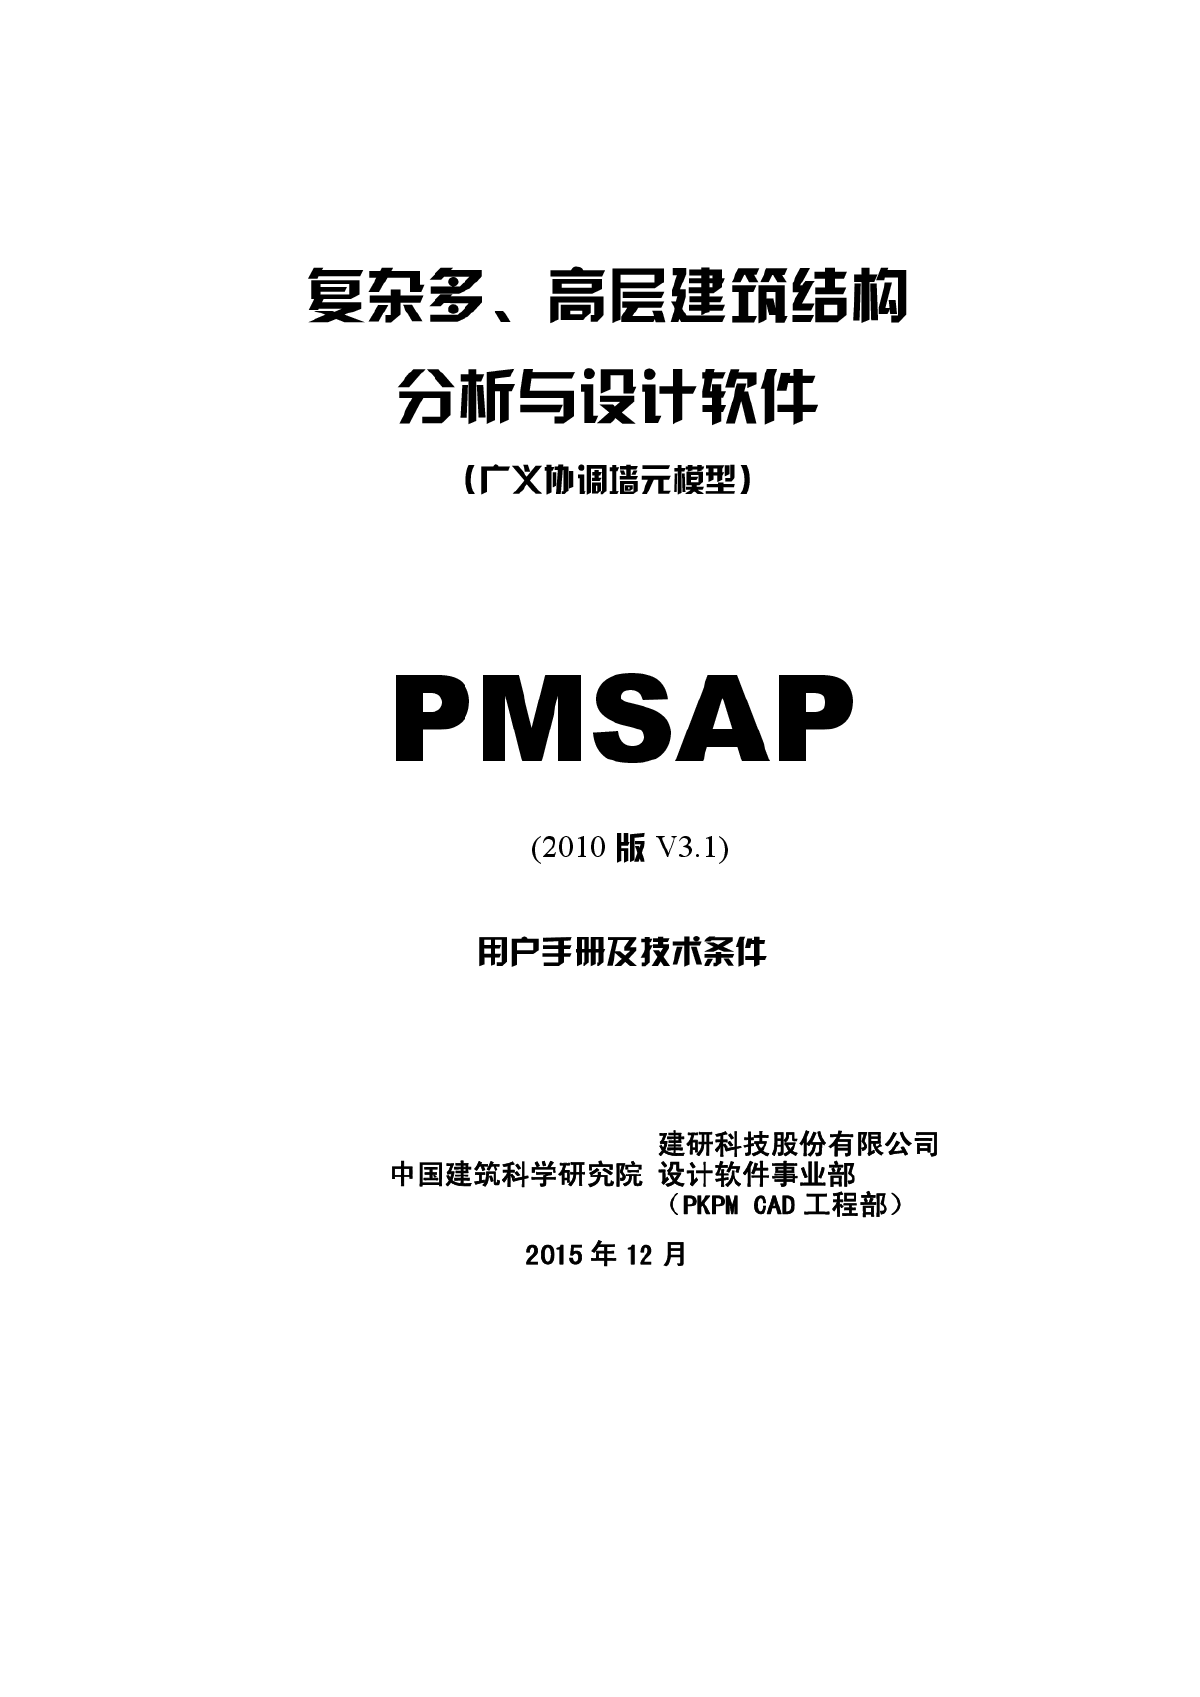 PKPMv3.1-pmsap(V3.1)用户手册